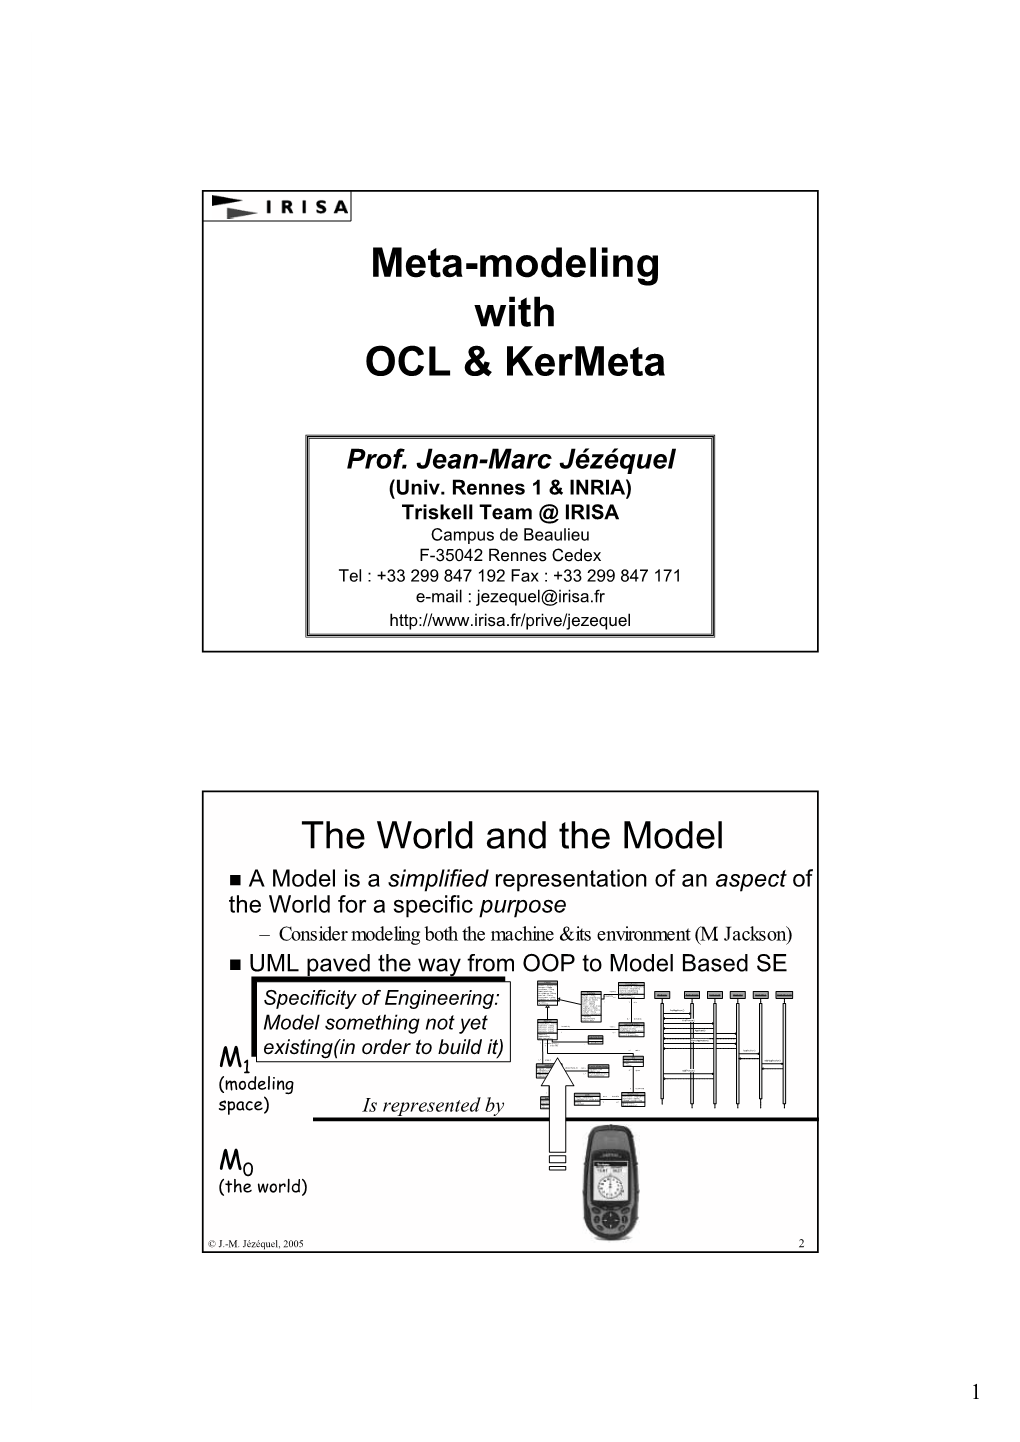 Meta-Modeling with OCL & Kermeta